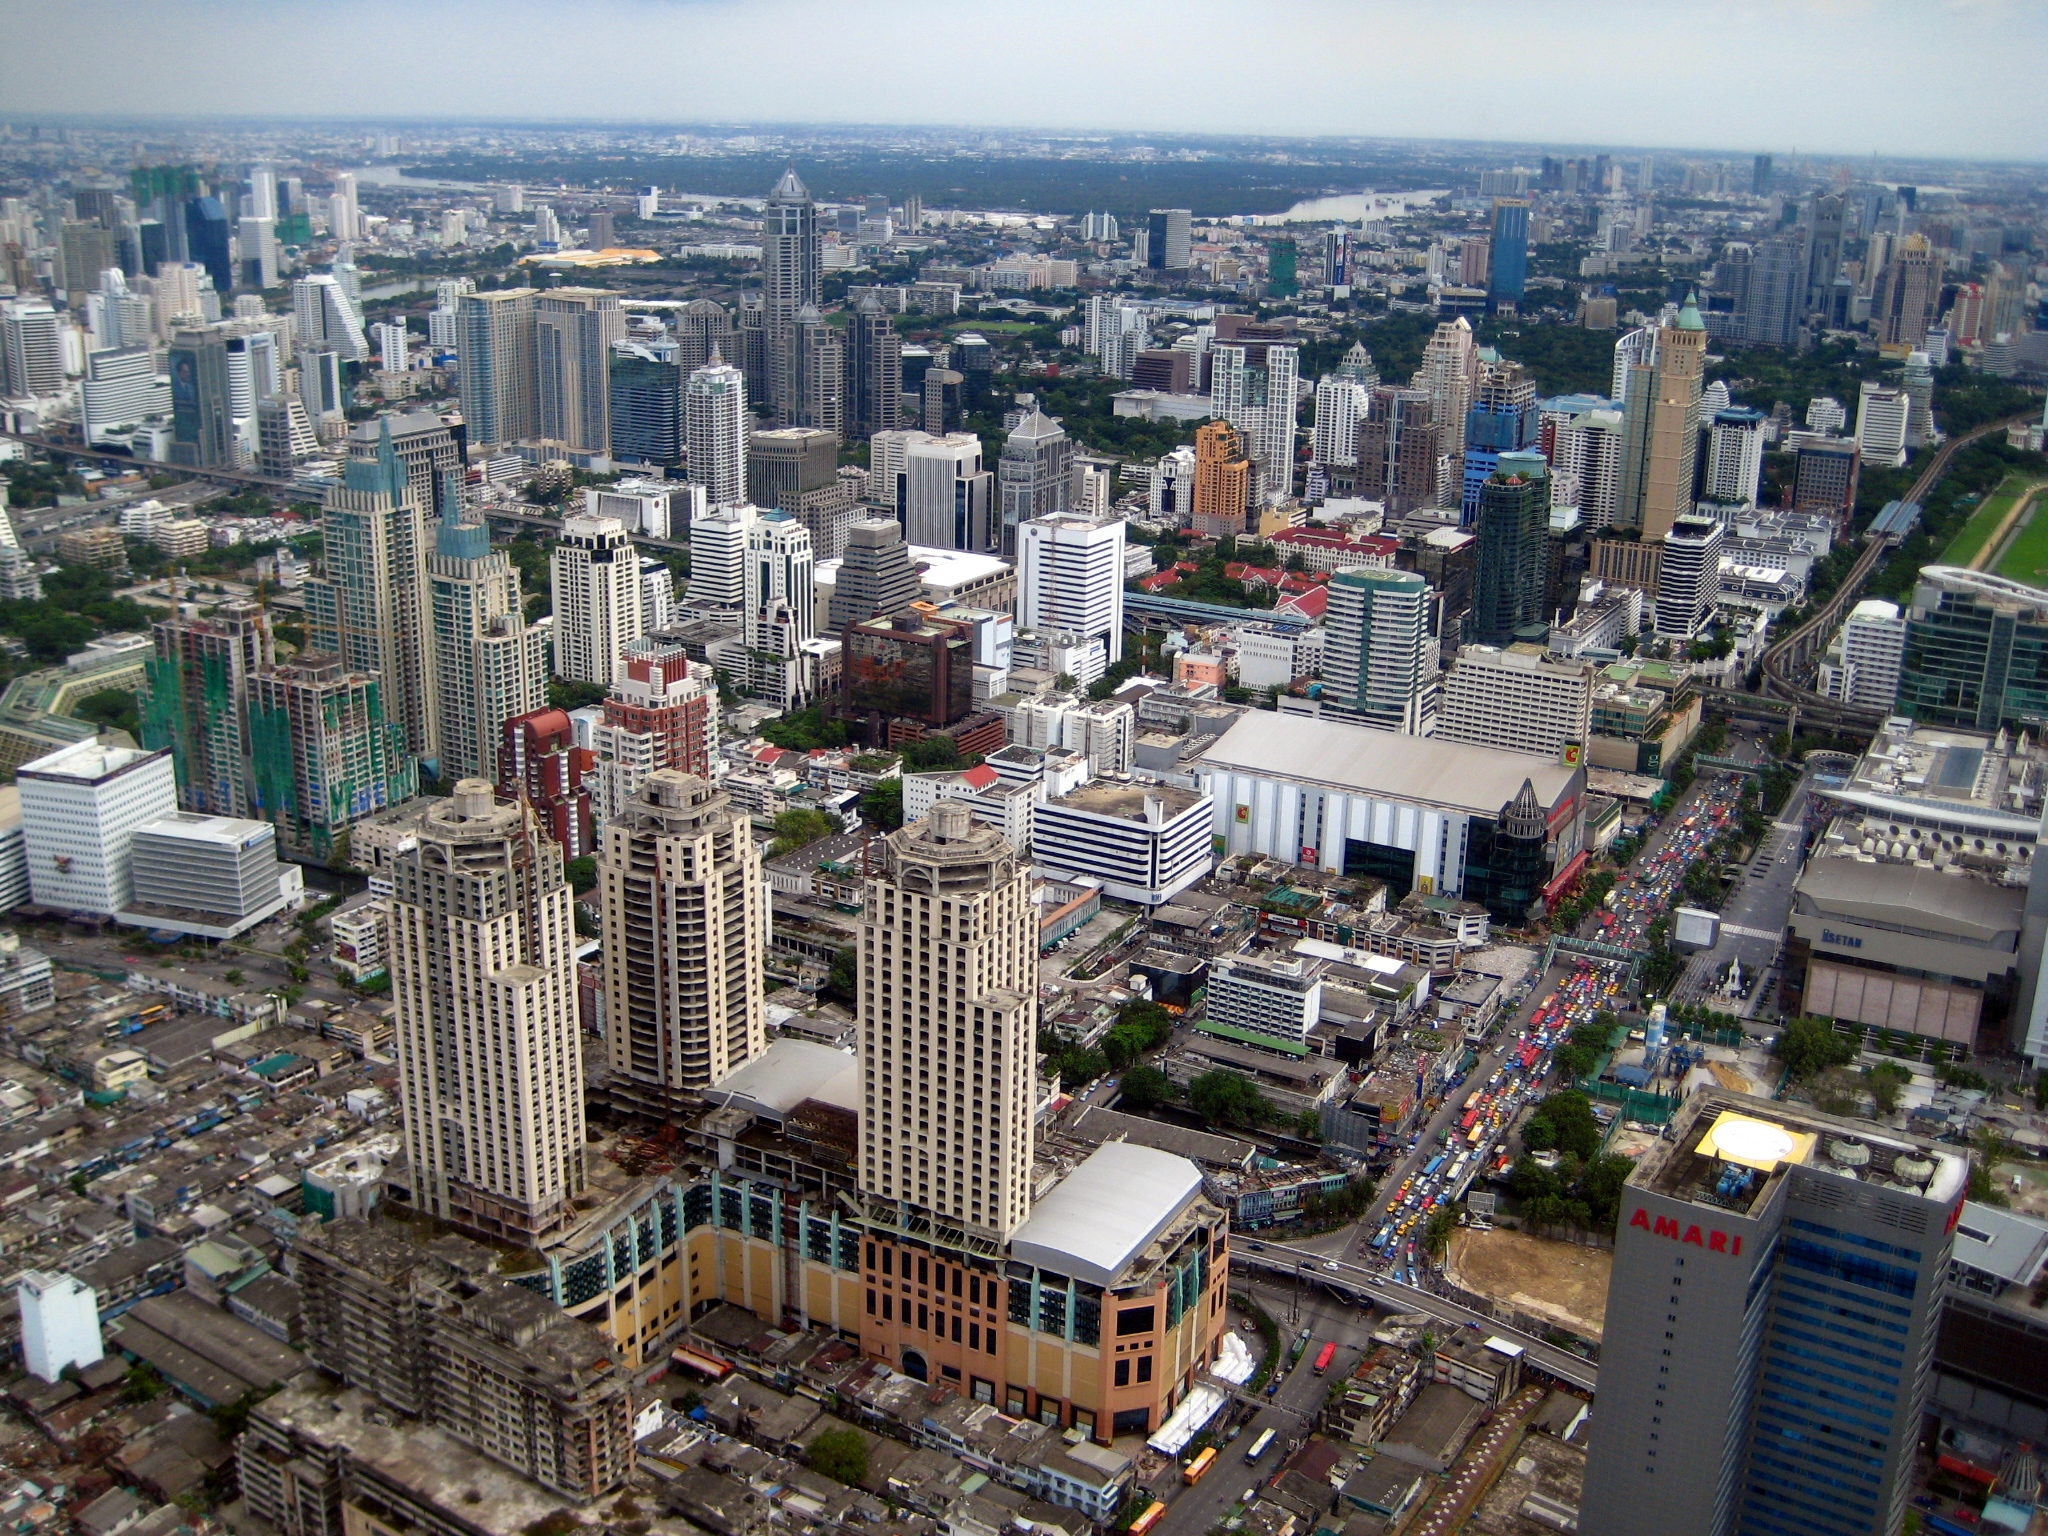 Bangkok from the sky